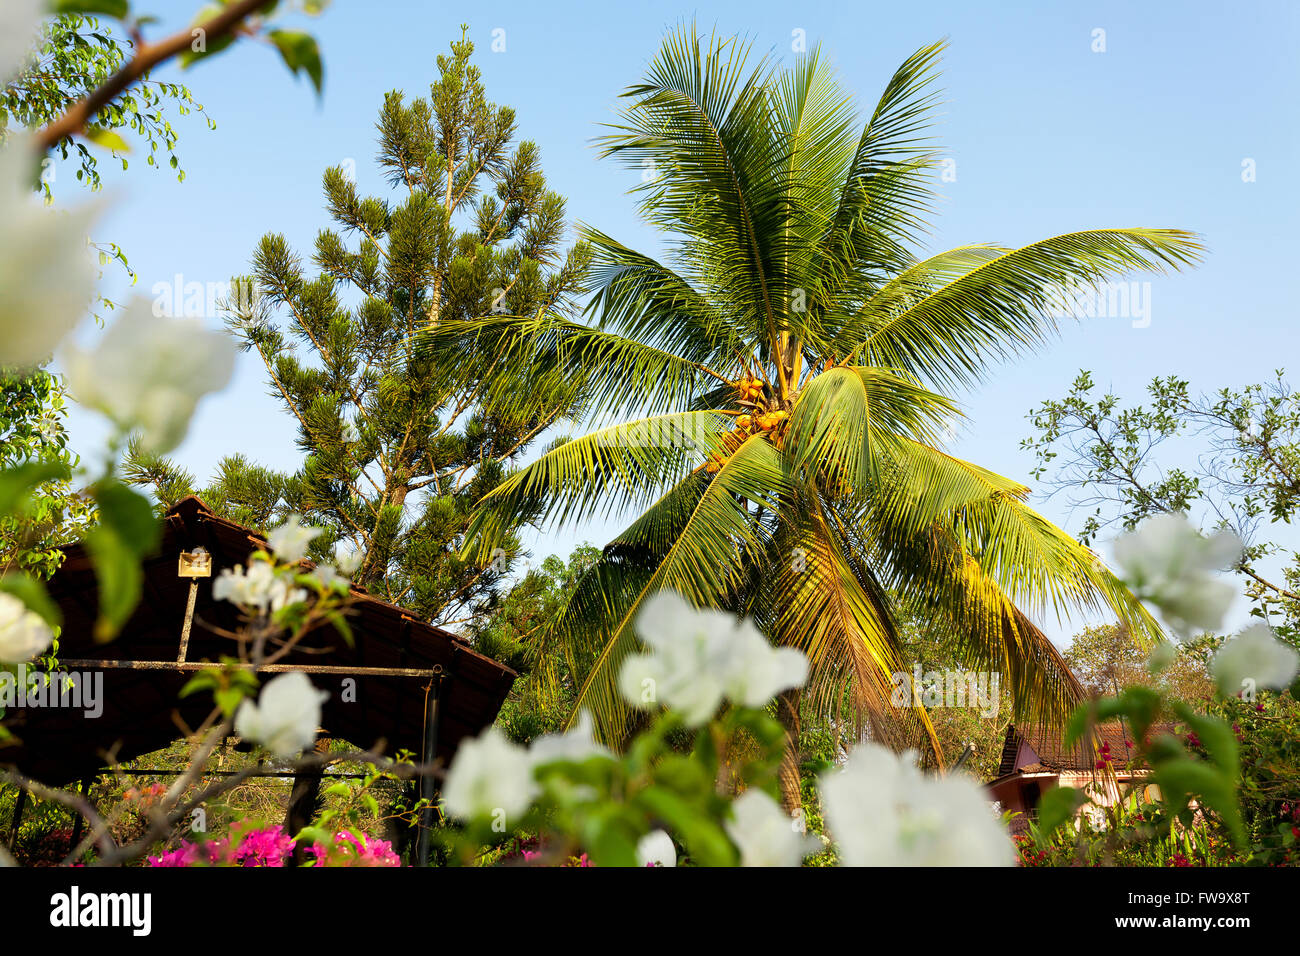 coconut palm tree garden Stock Photo